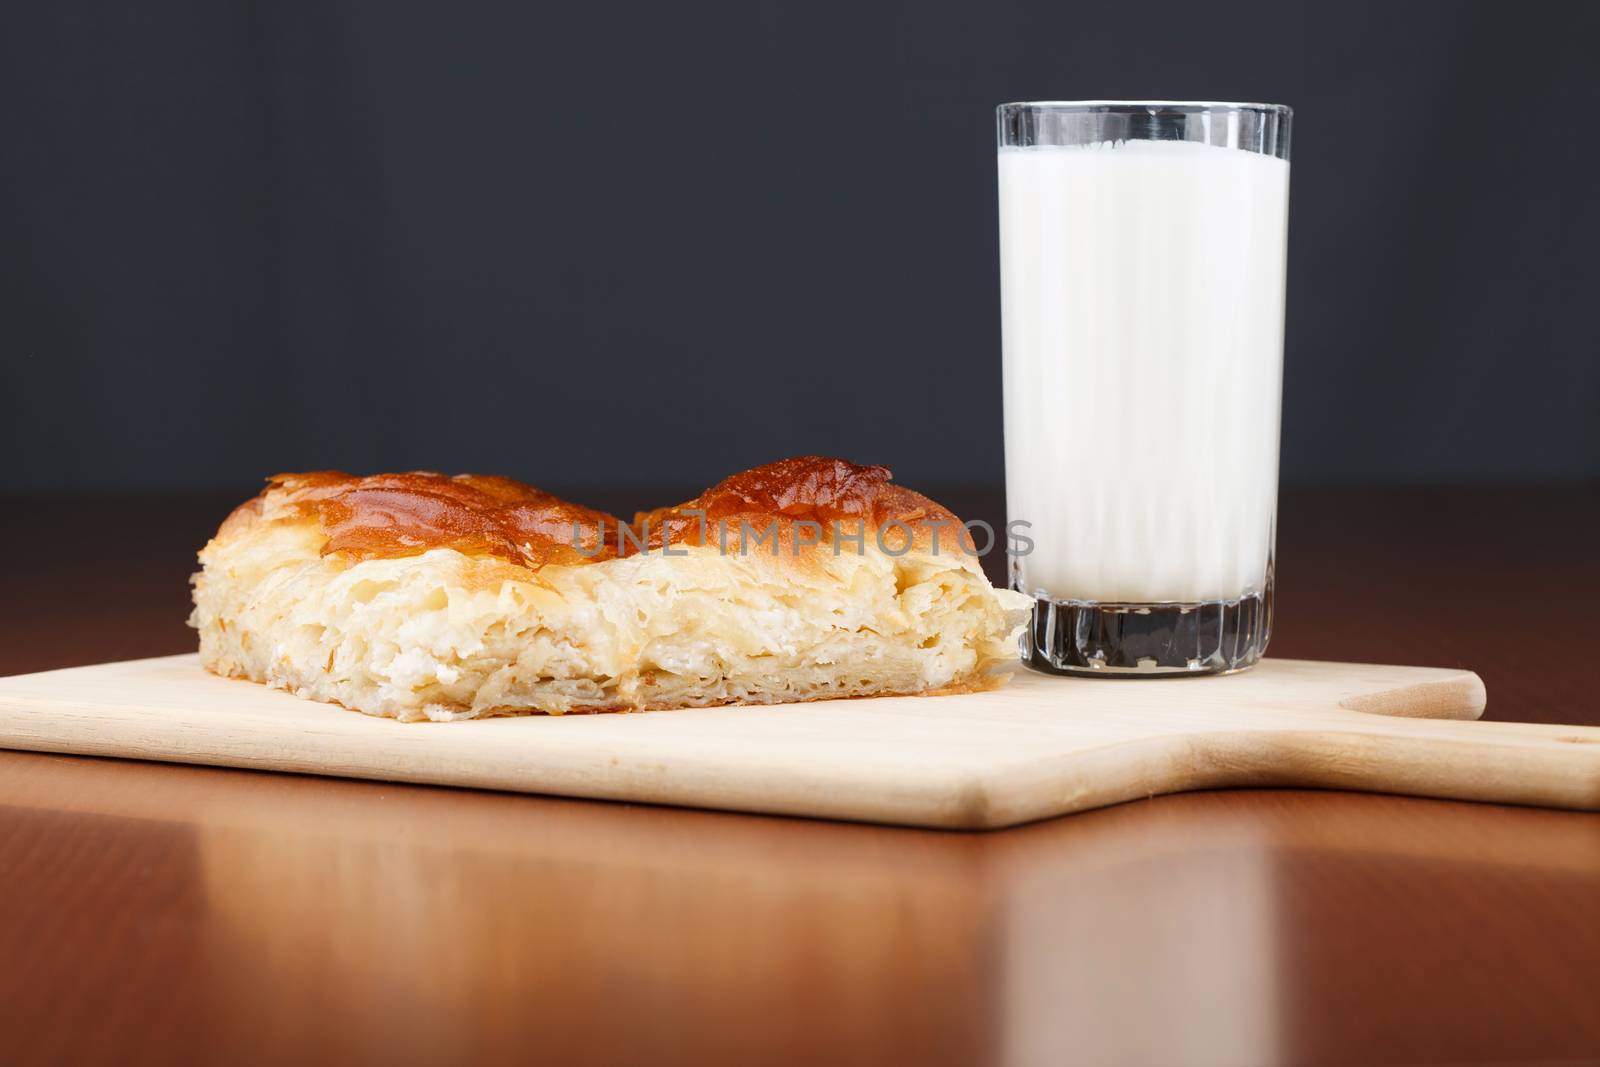 Burek sa sirom (pie with cheese and yogurt) is traditional Balkanian meal